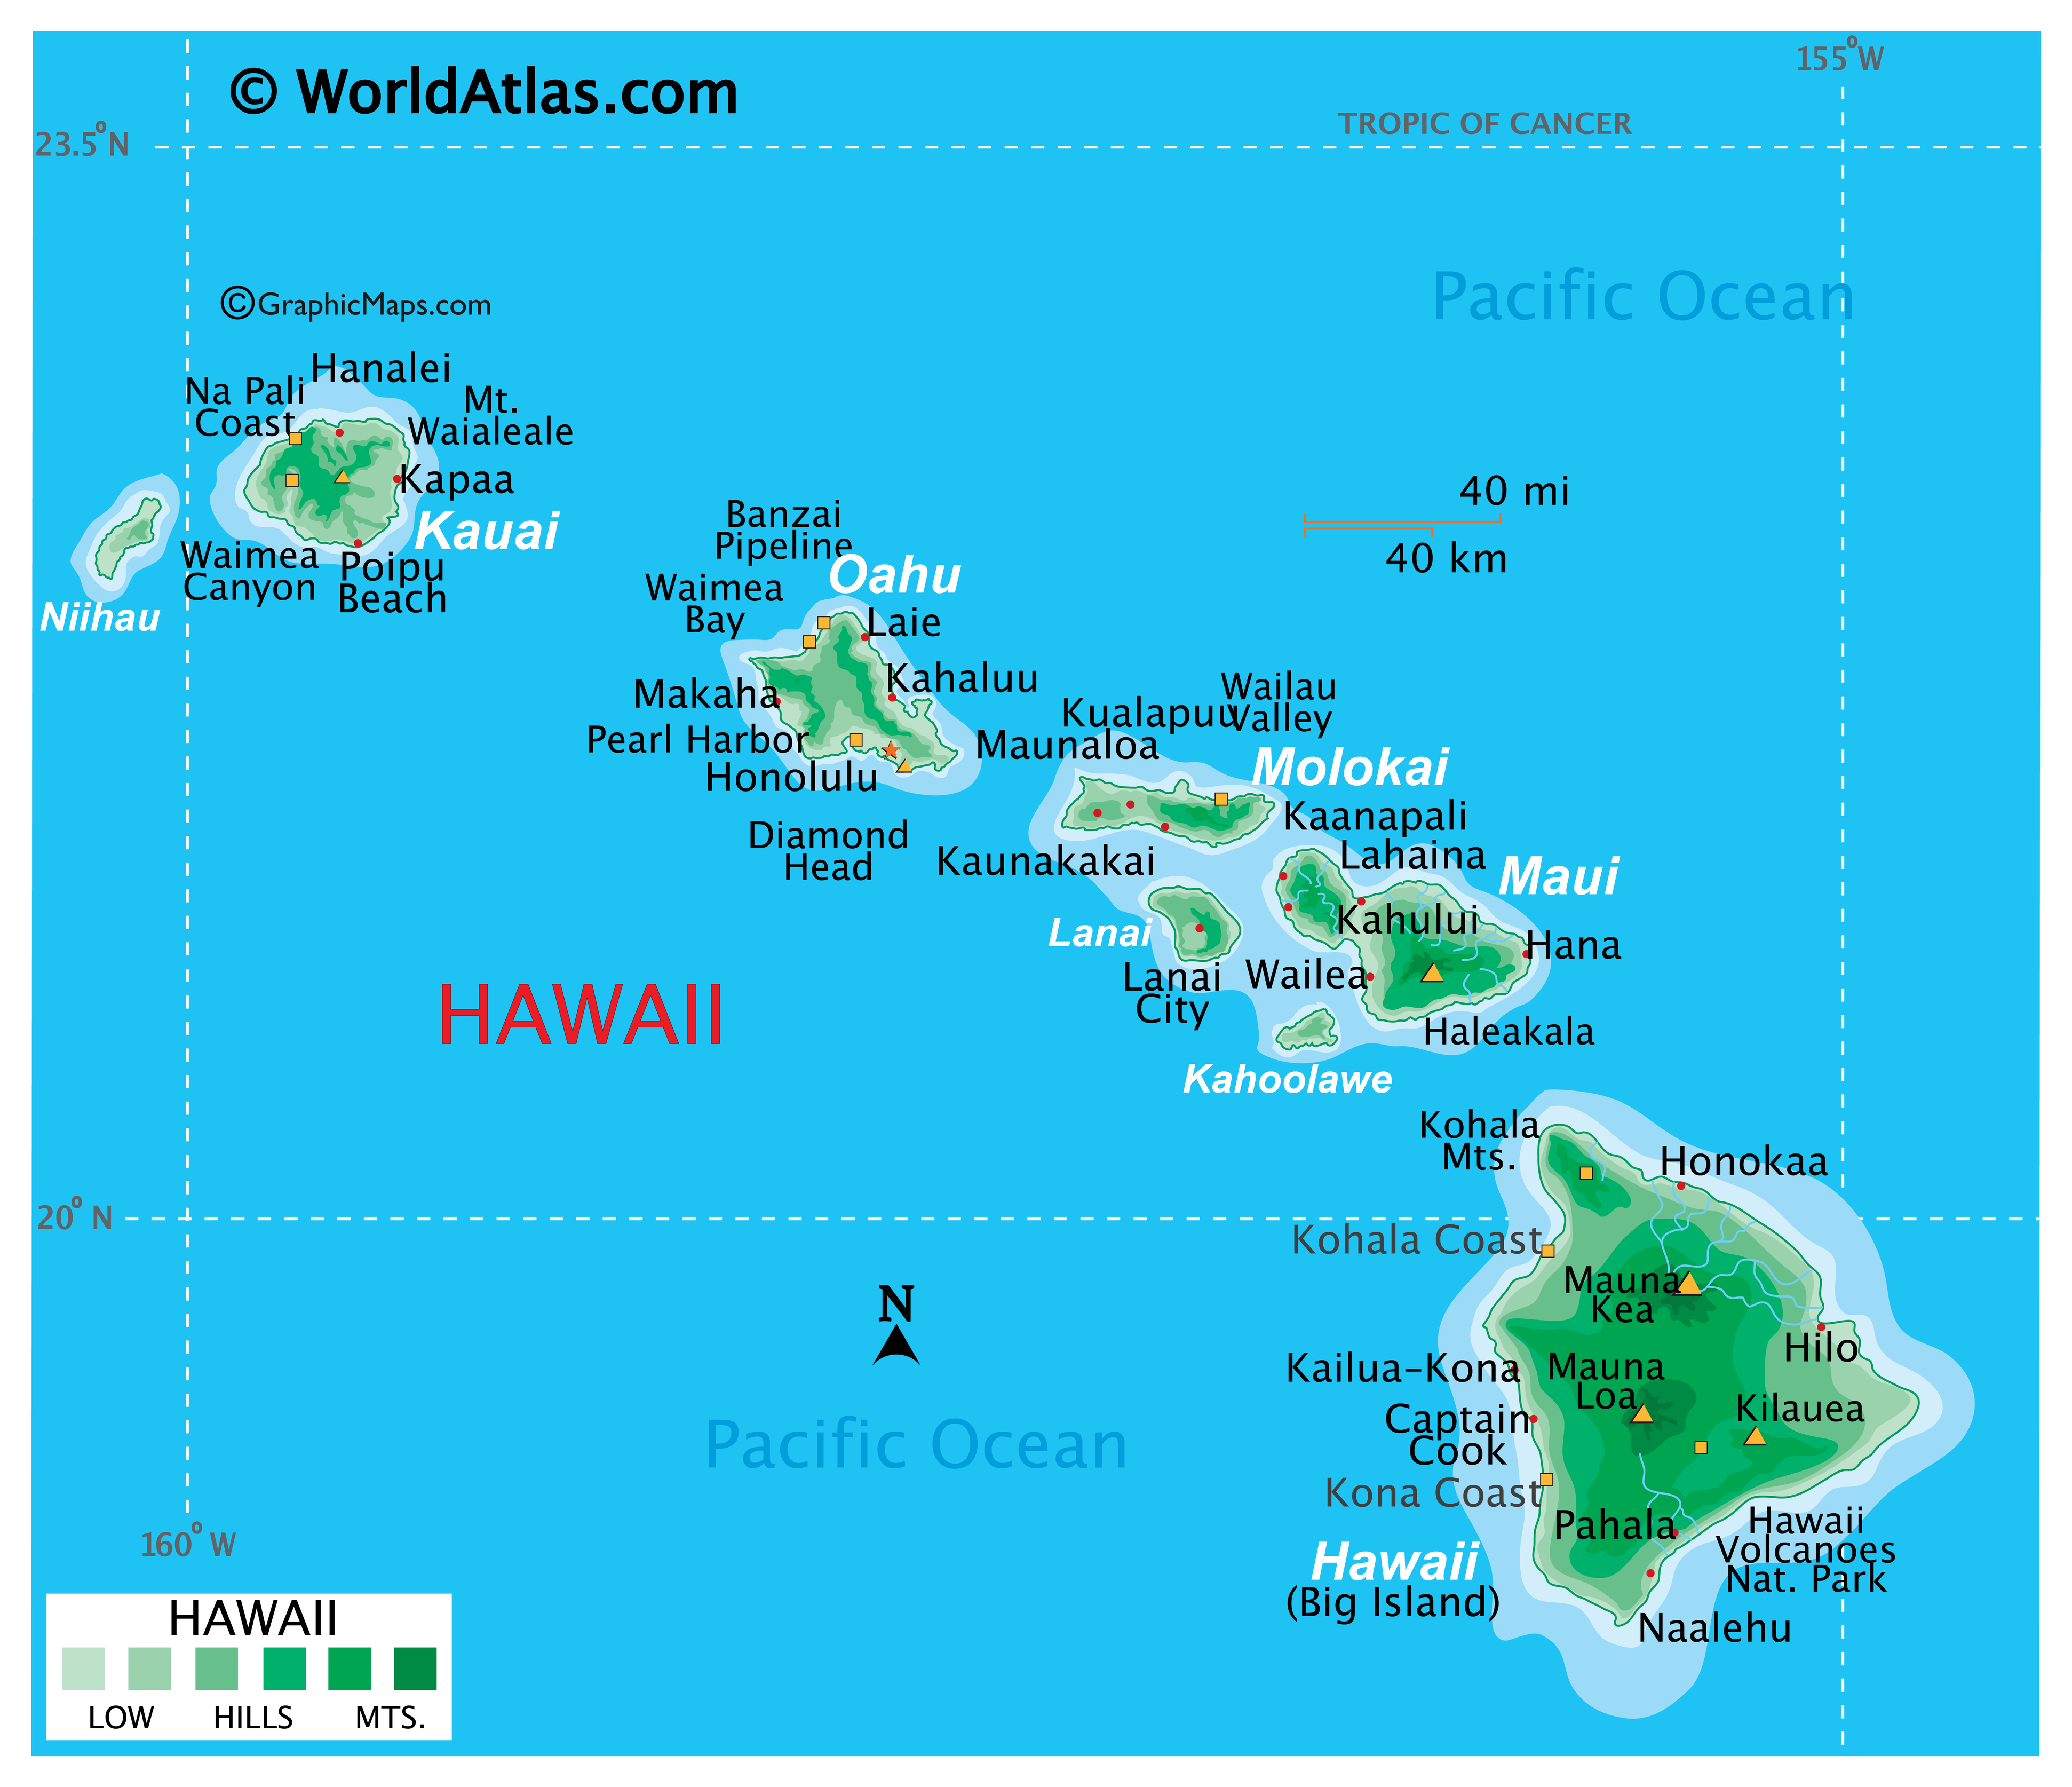 show me a map of hawaii Hawaii Map Geography Of Hawaii Map Of Hawaii Worldatlas Com show me a map of hawaii